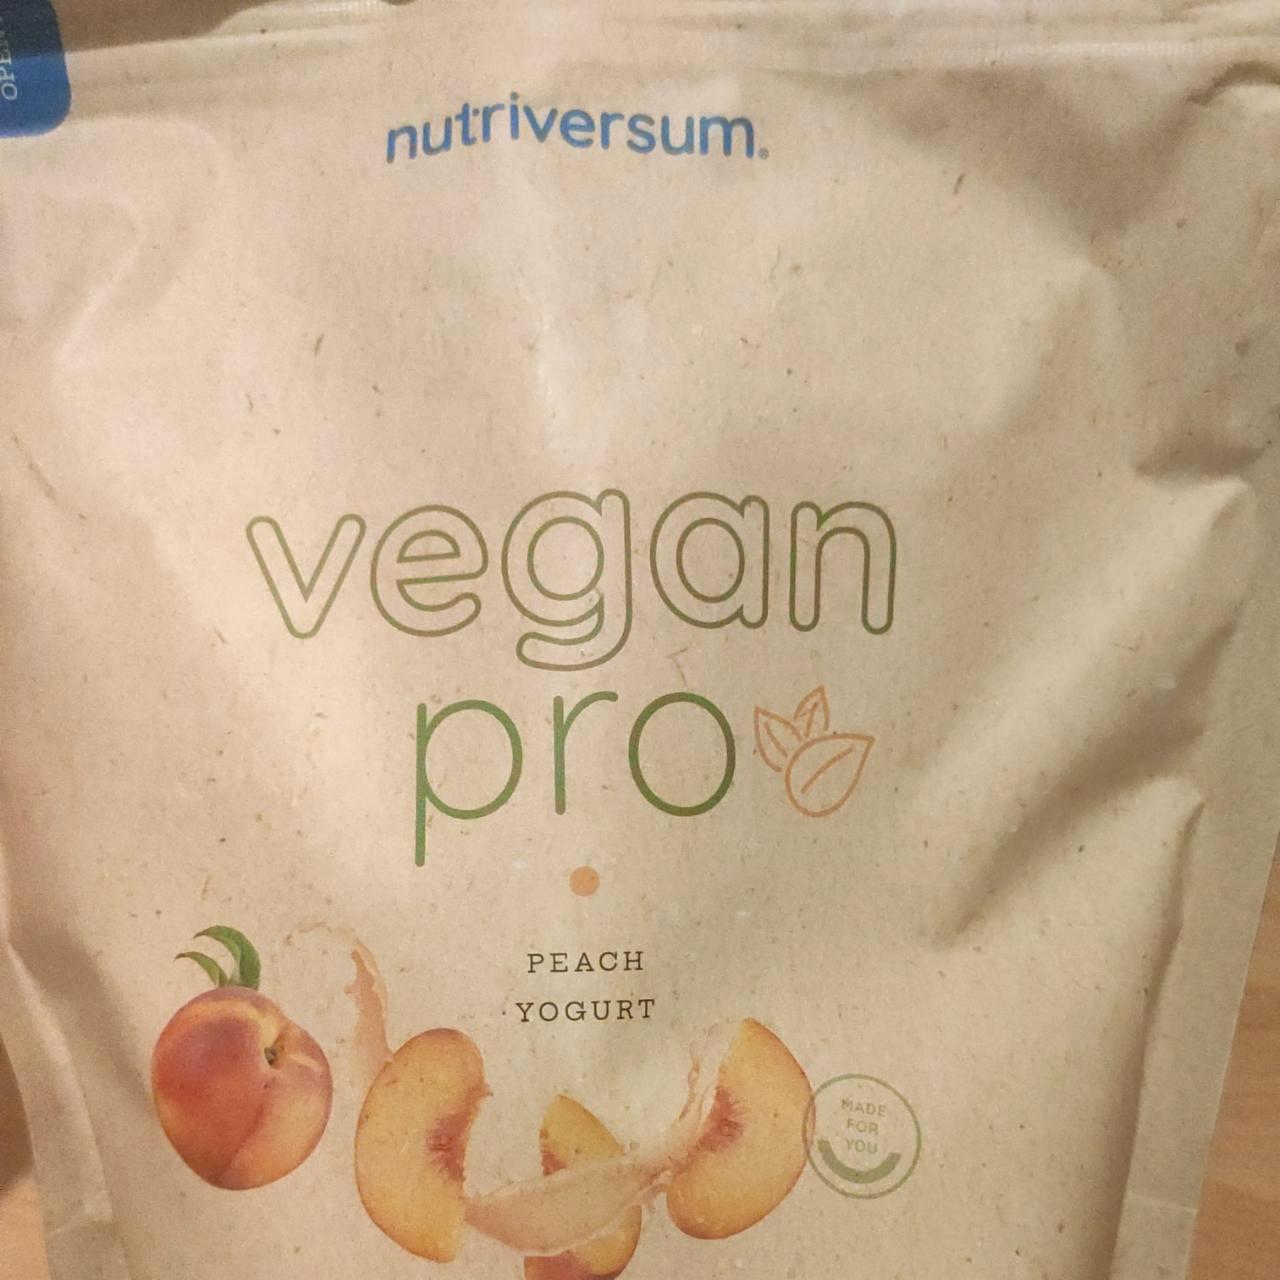 Képek - Vegan pro peach yoghurt Nutriversum